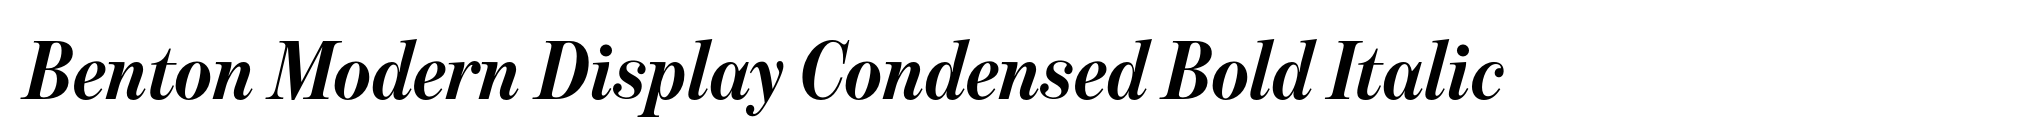 Benton Modern Display Condensed Bold Italic image